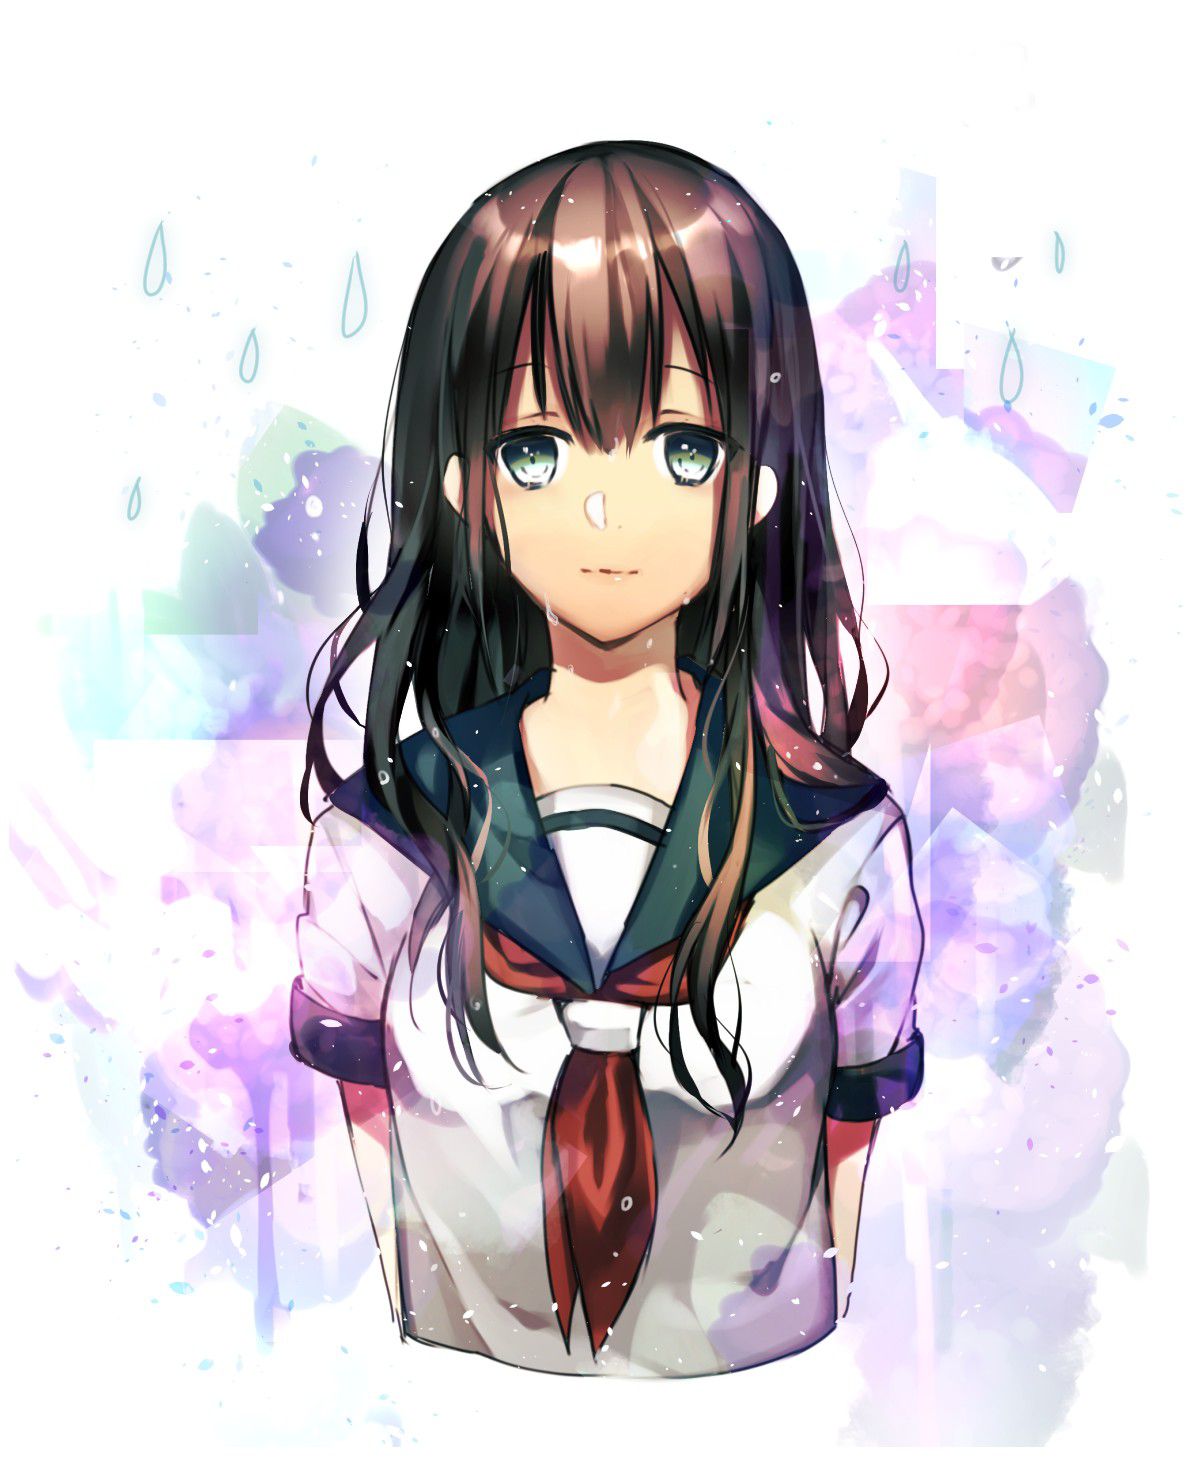 [Secondary] secondary image of a pretty girl wearing a school uniform Part 20 [uniform, non-erotic] 17